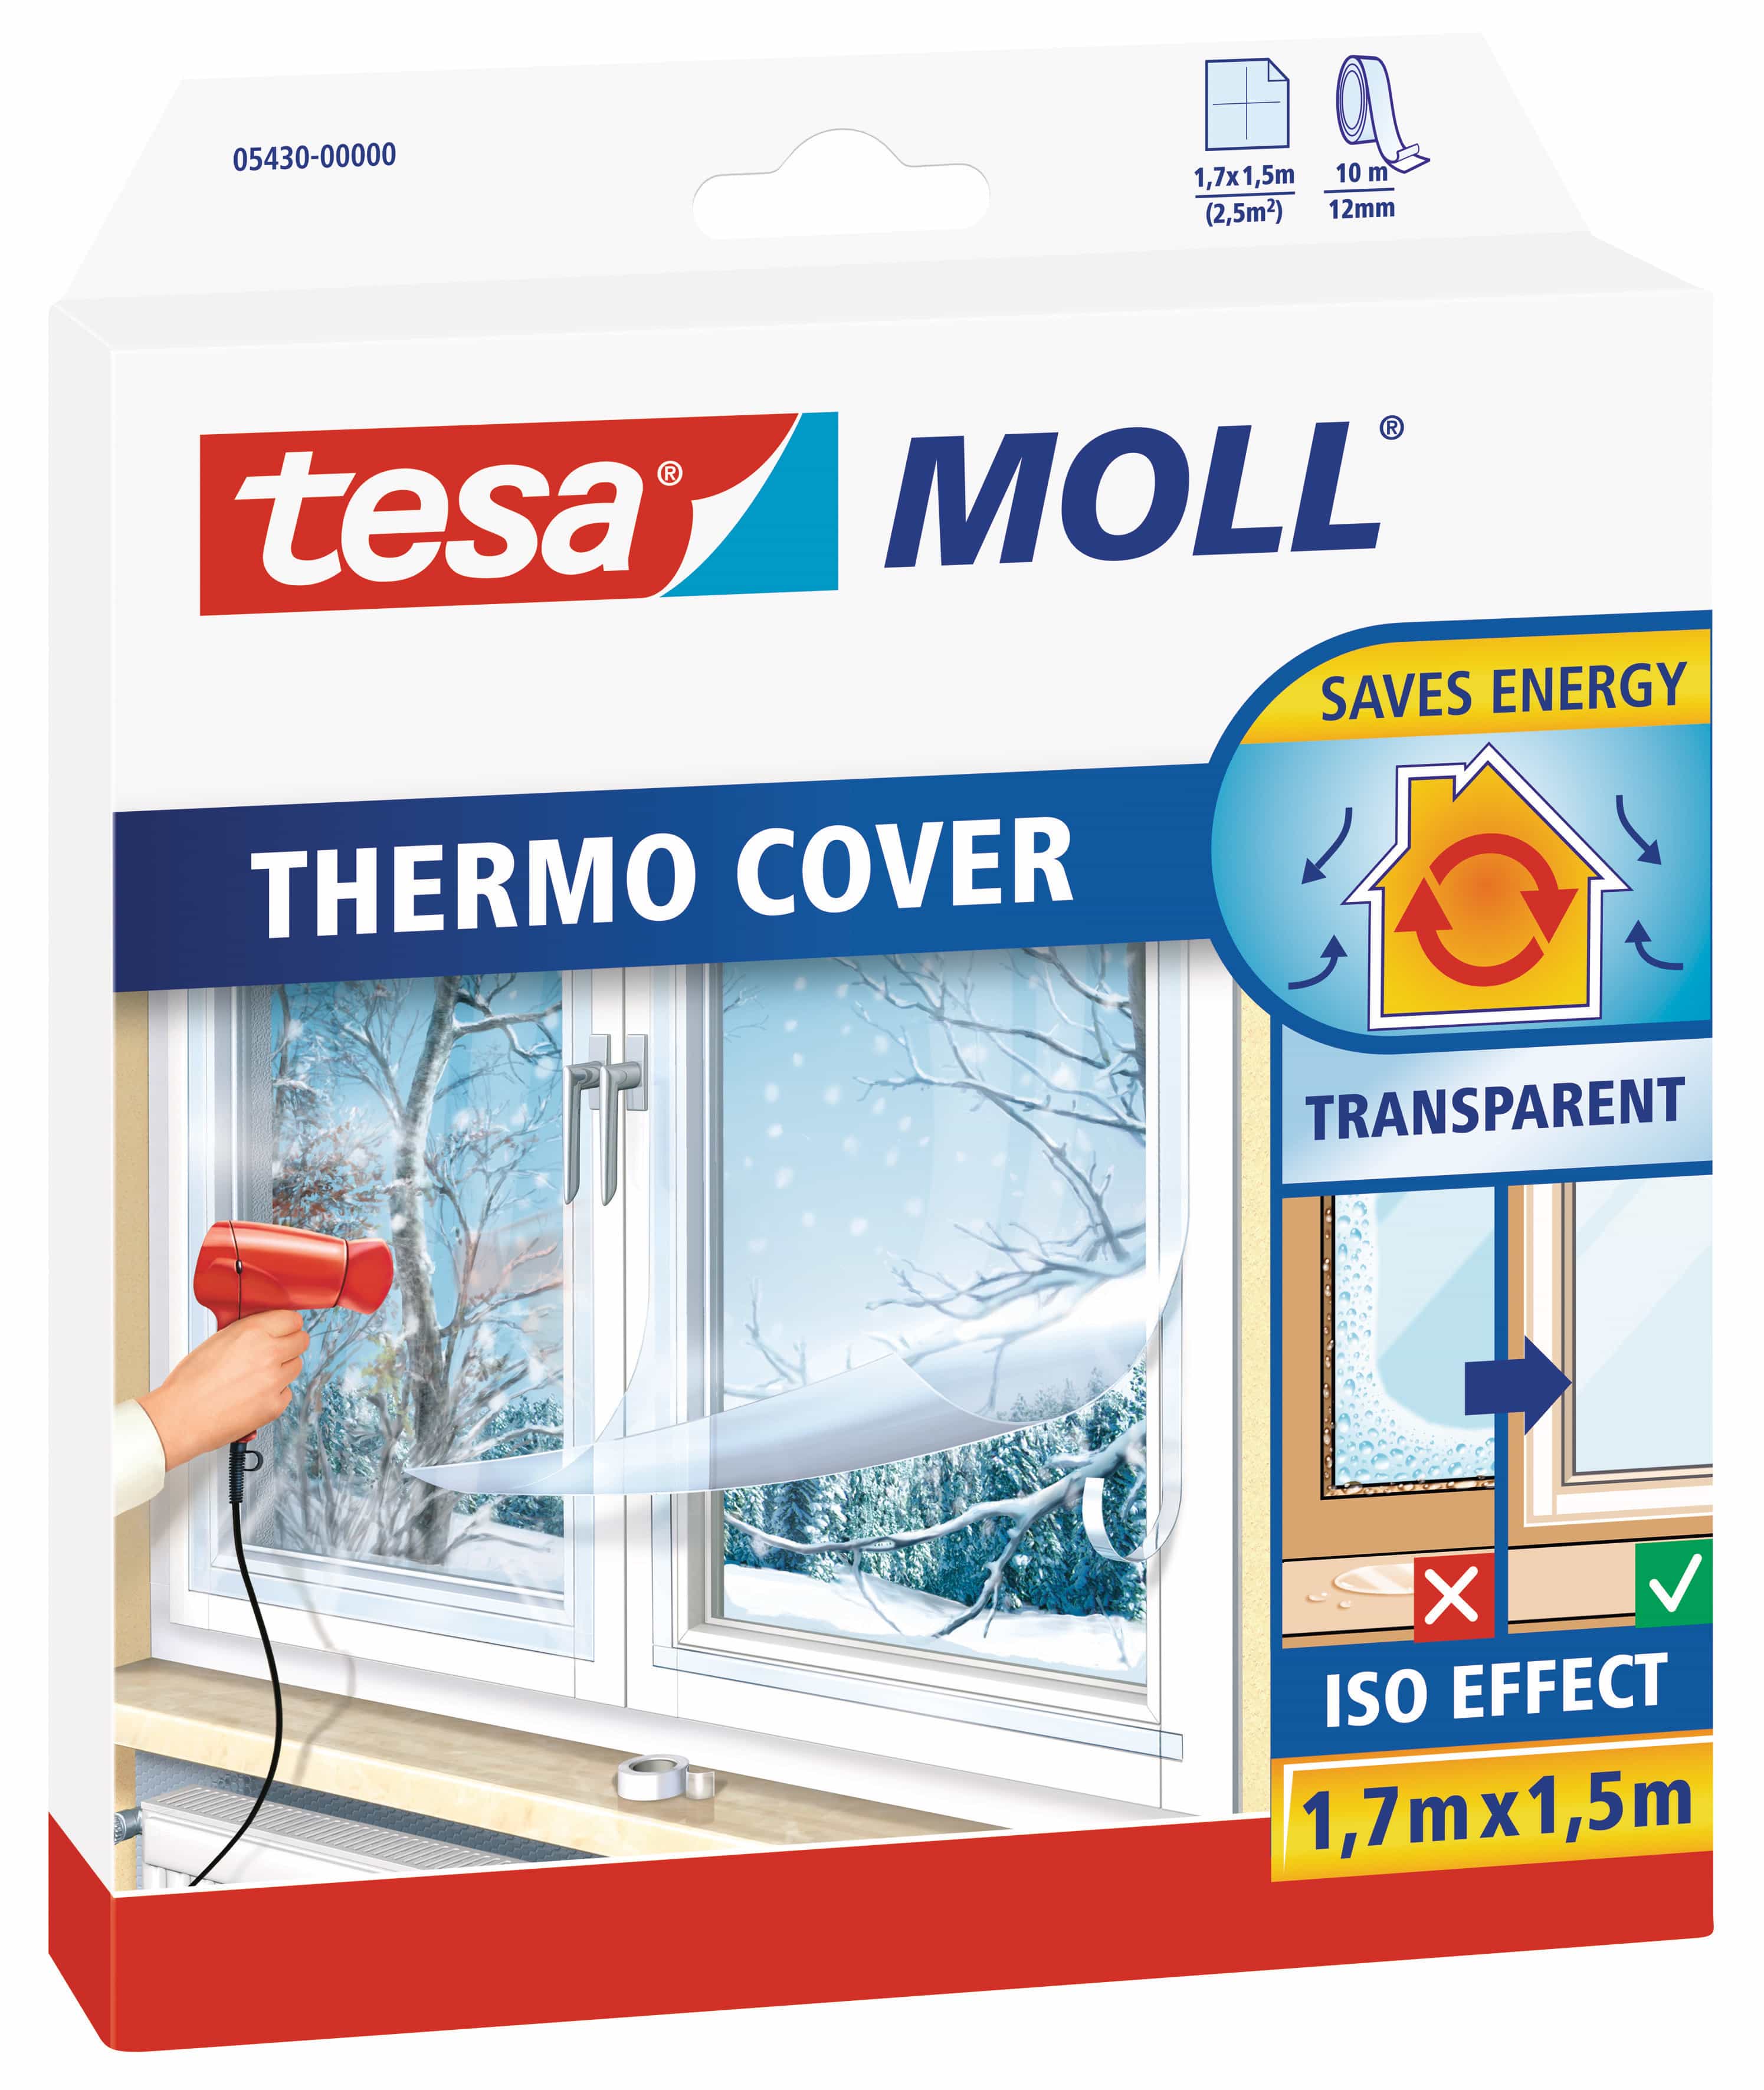 TESA tesamoll® Thermo Cover Fensterisolierfolie, 1,5 m x 1,7 m